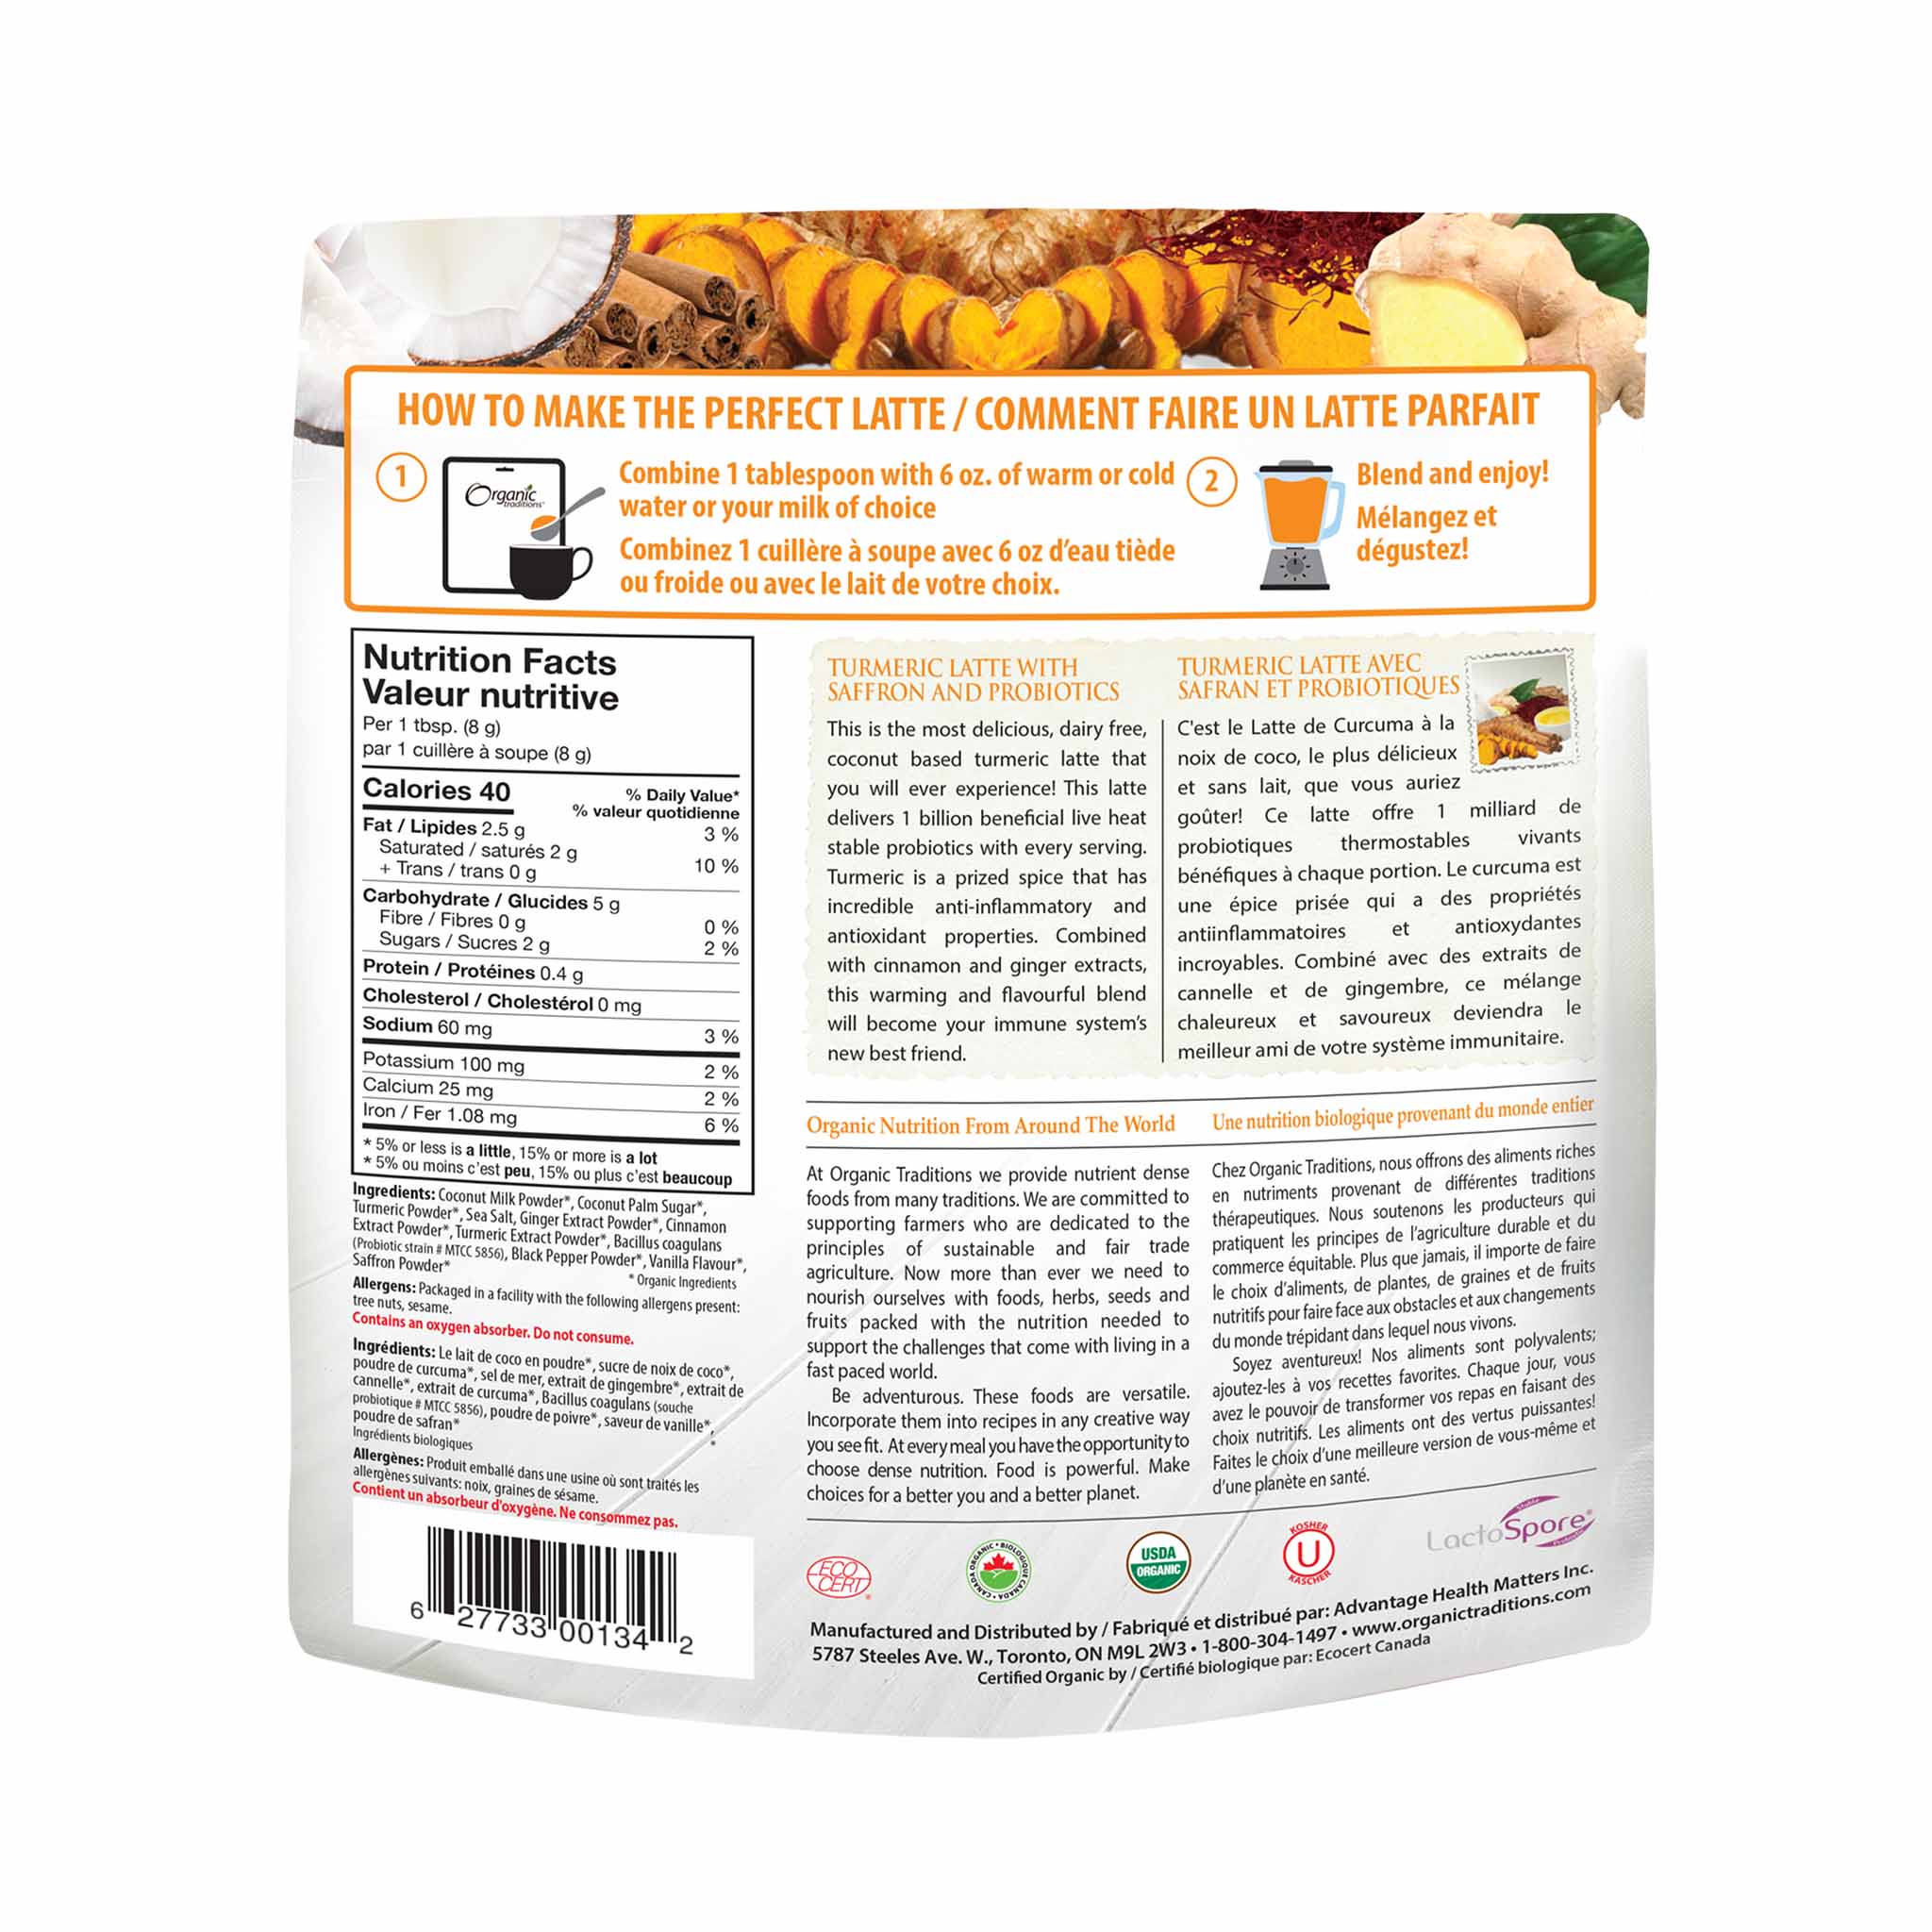 Organic Traditions Organic Turmeric Latte with Probiotics 150g